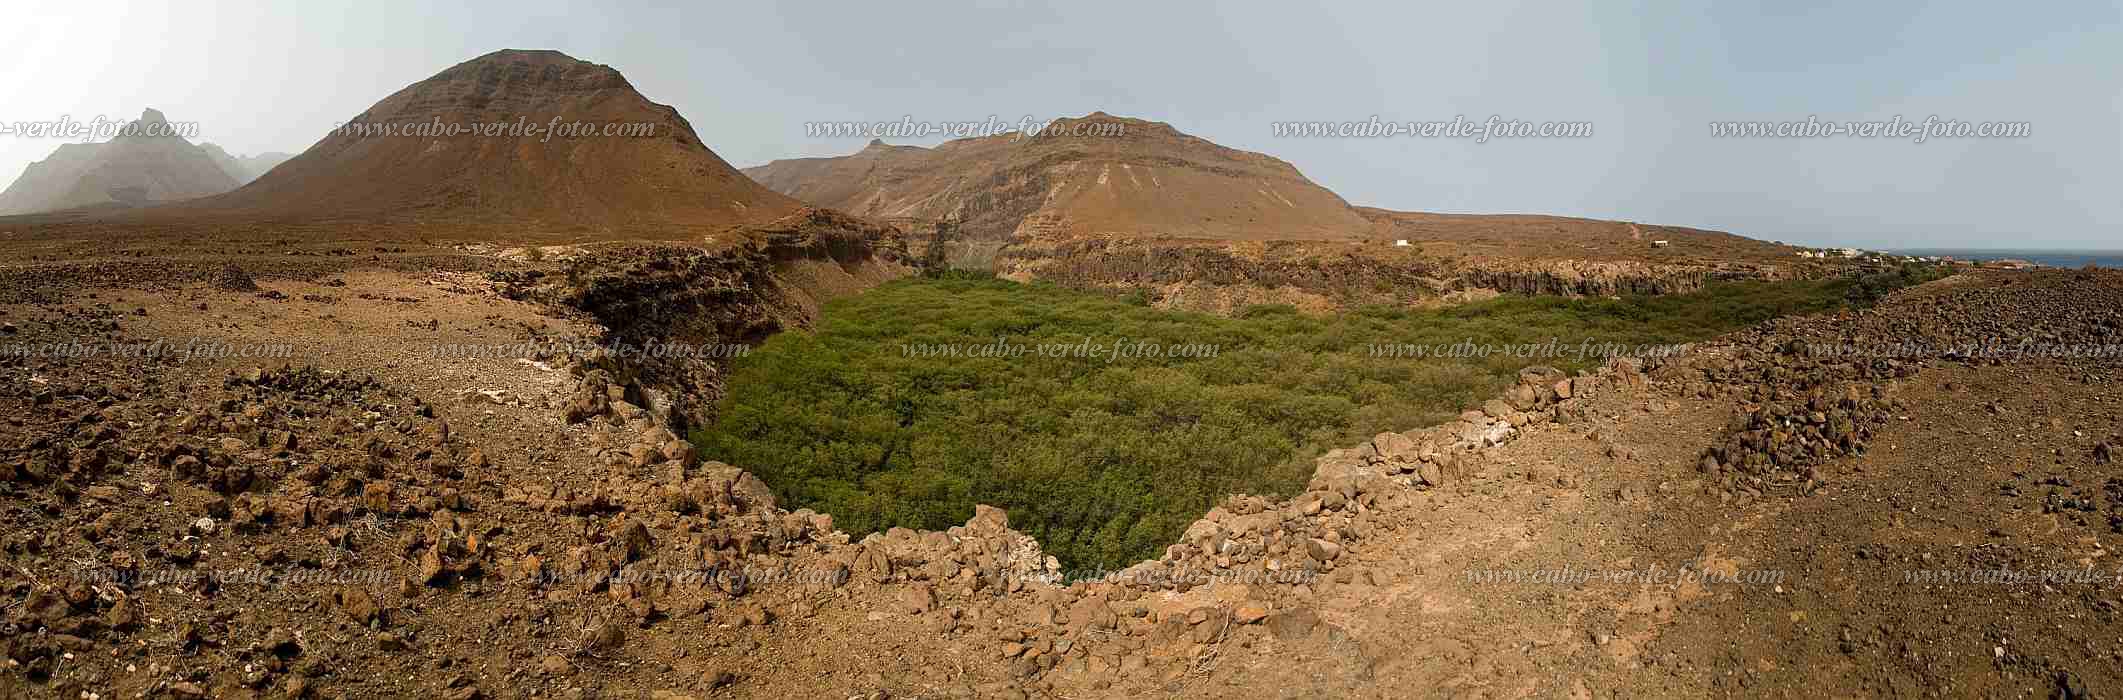 So Nicolau : Carrical :  : Landscape DesertCabo Verde Foto Gallery